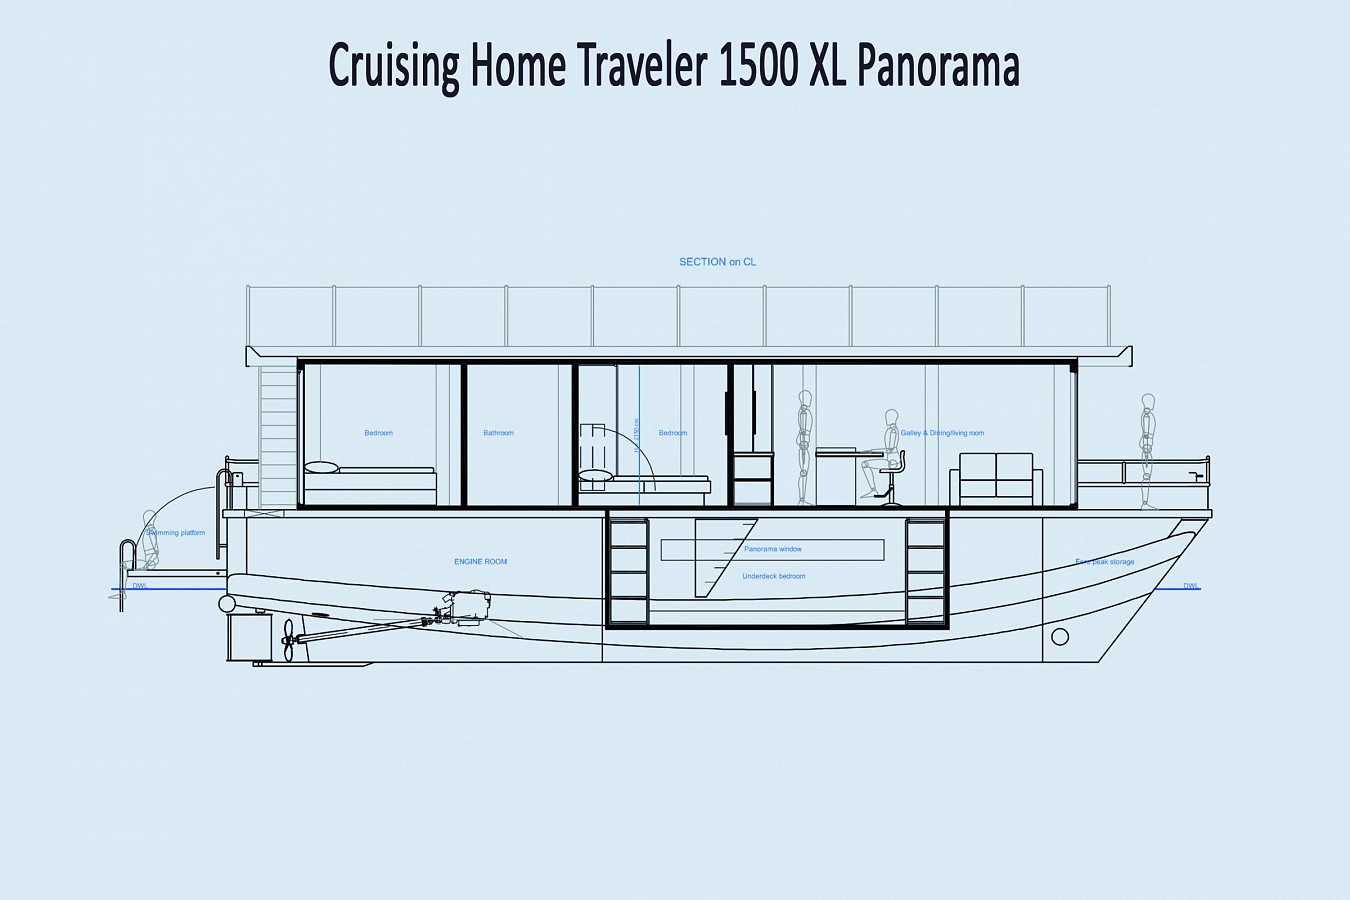 Cruising Home Traveler 1500 XL Panorama